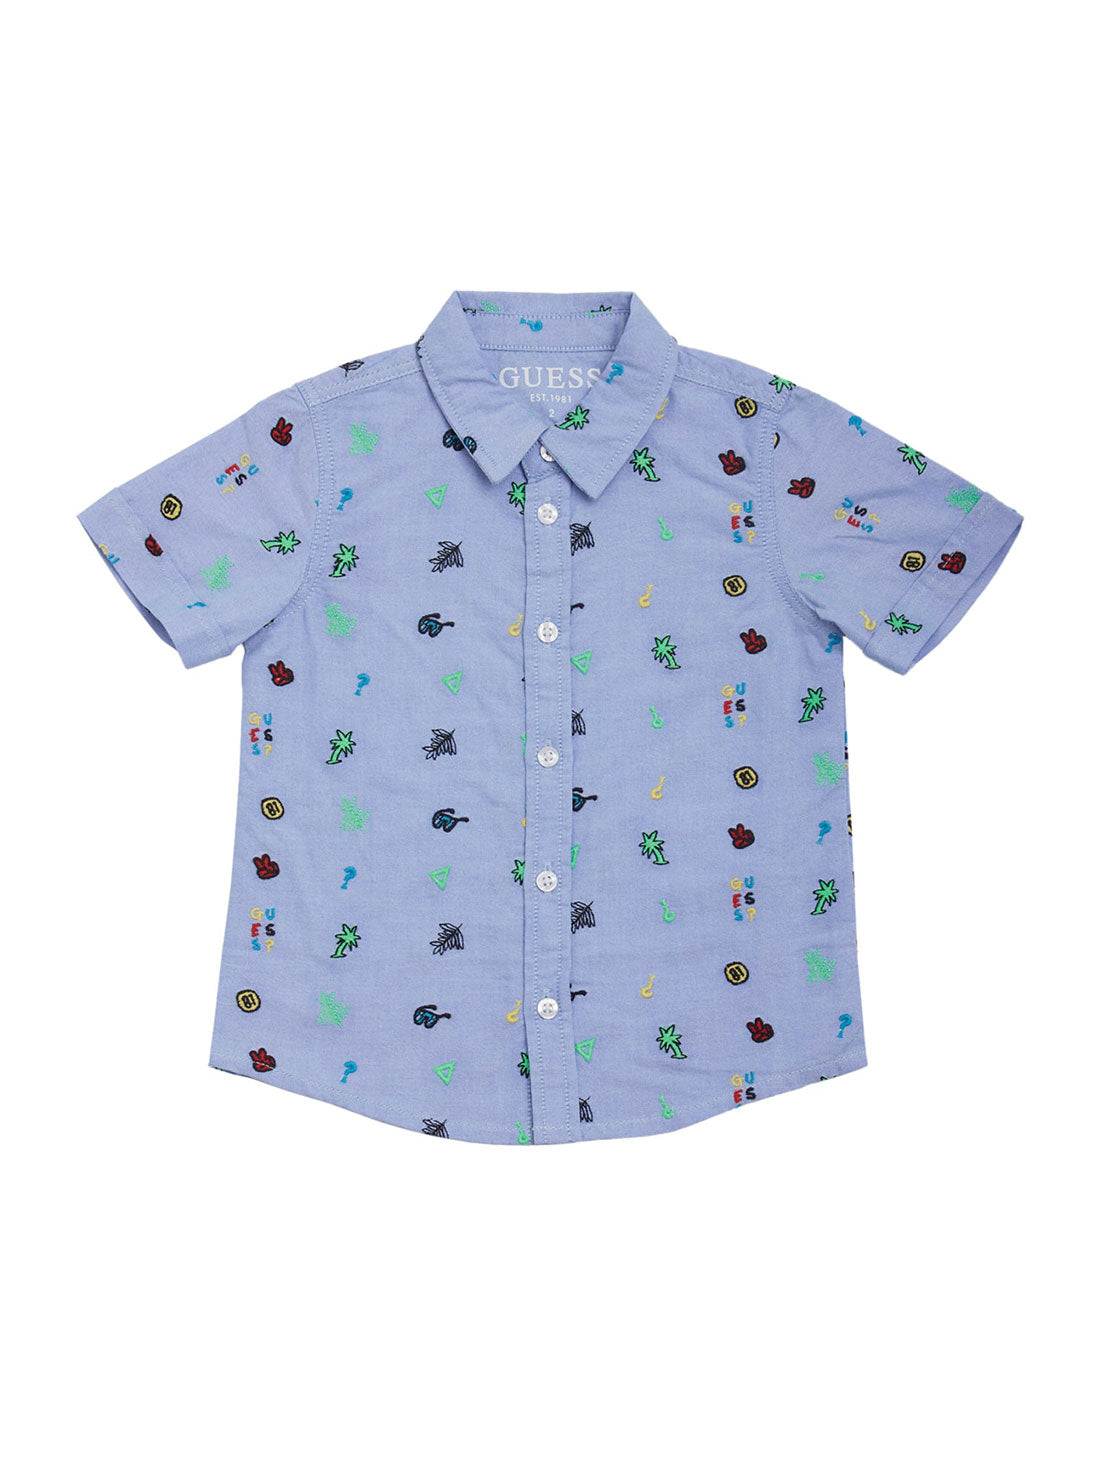 GUESS Little Boy Blue Airplane Print Oxford Shirt (2-7) N2GH06W9CL0 Front View